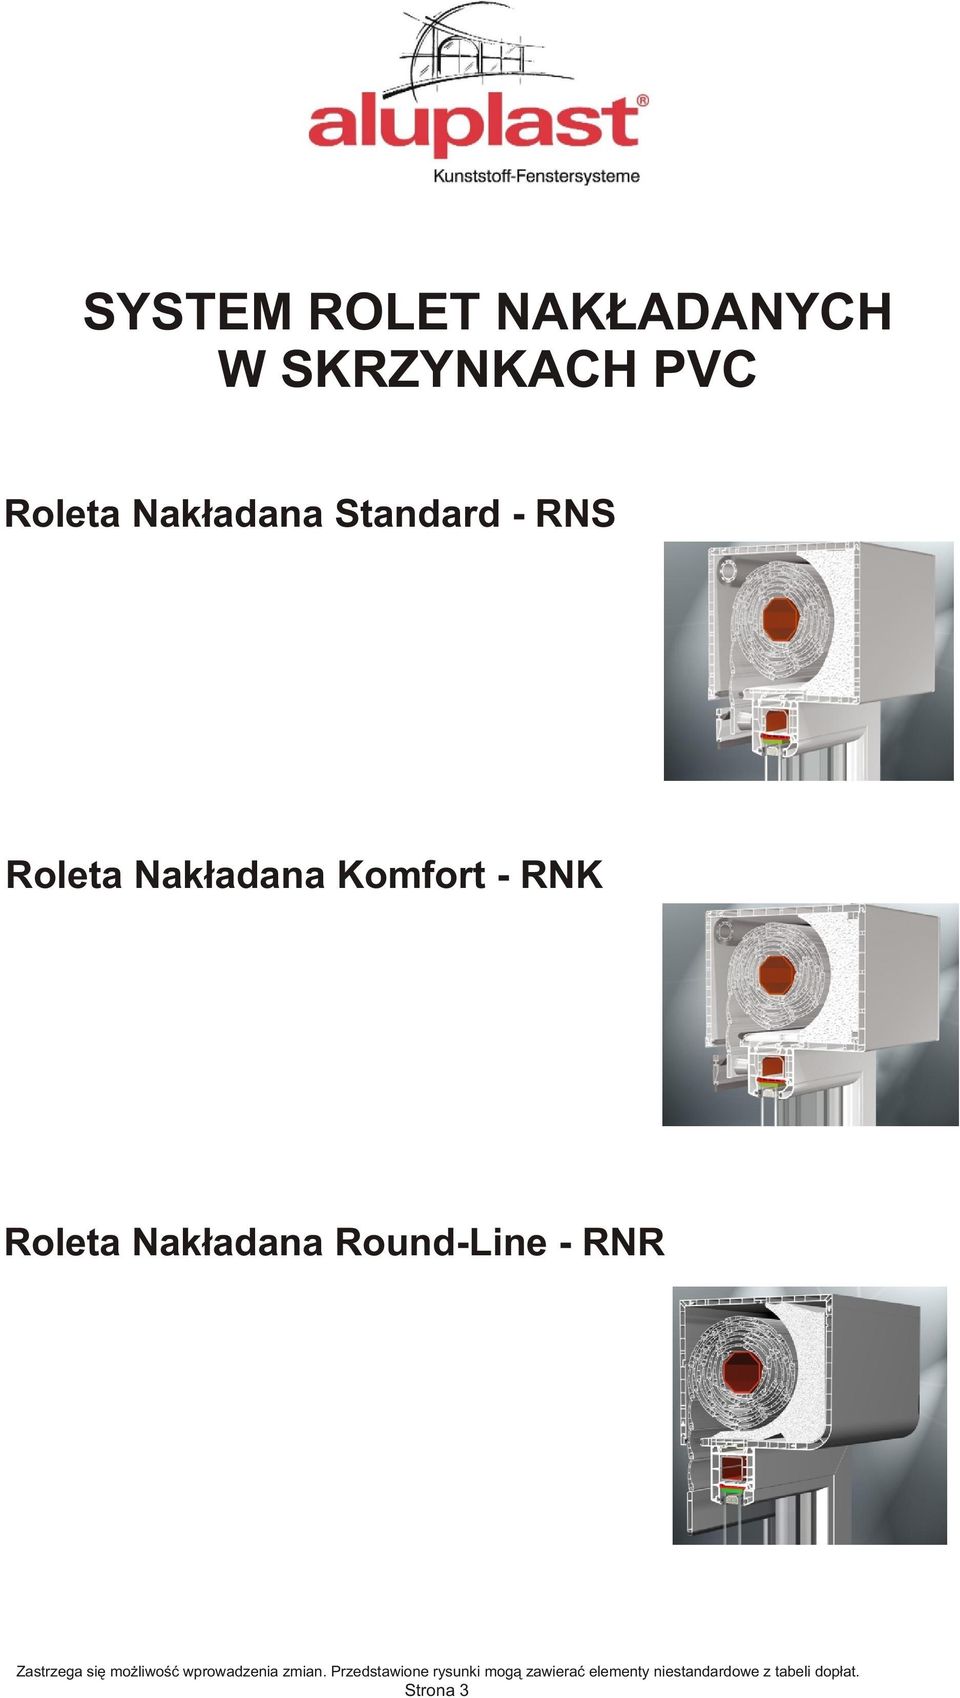 Standard - RNS Roleta Nak³adana